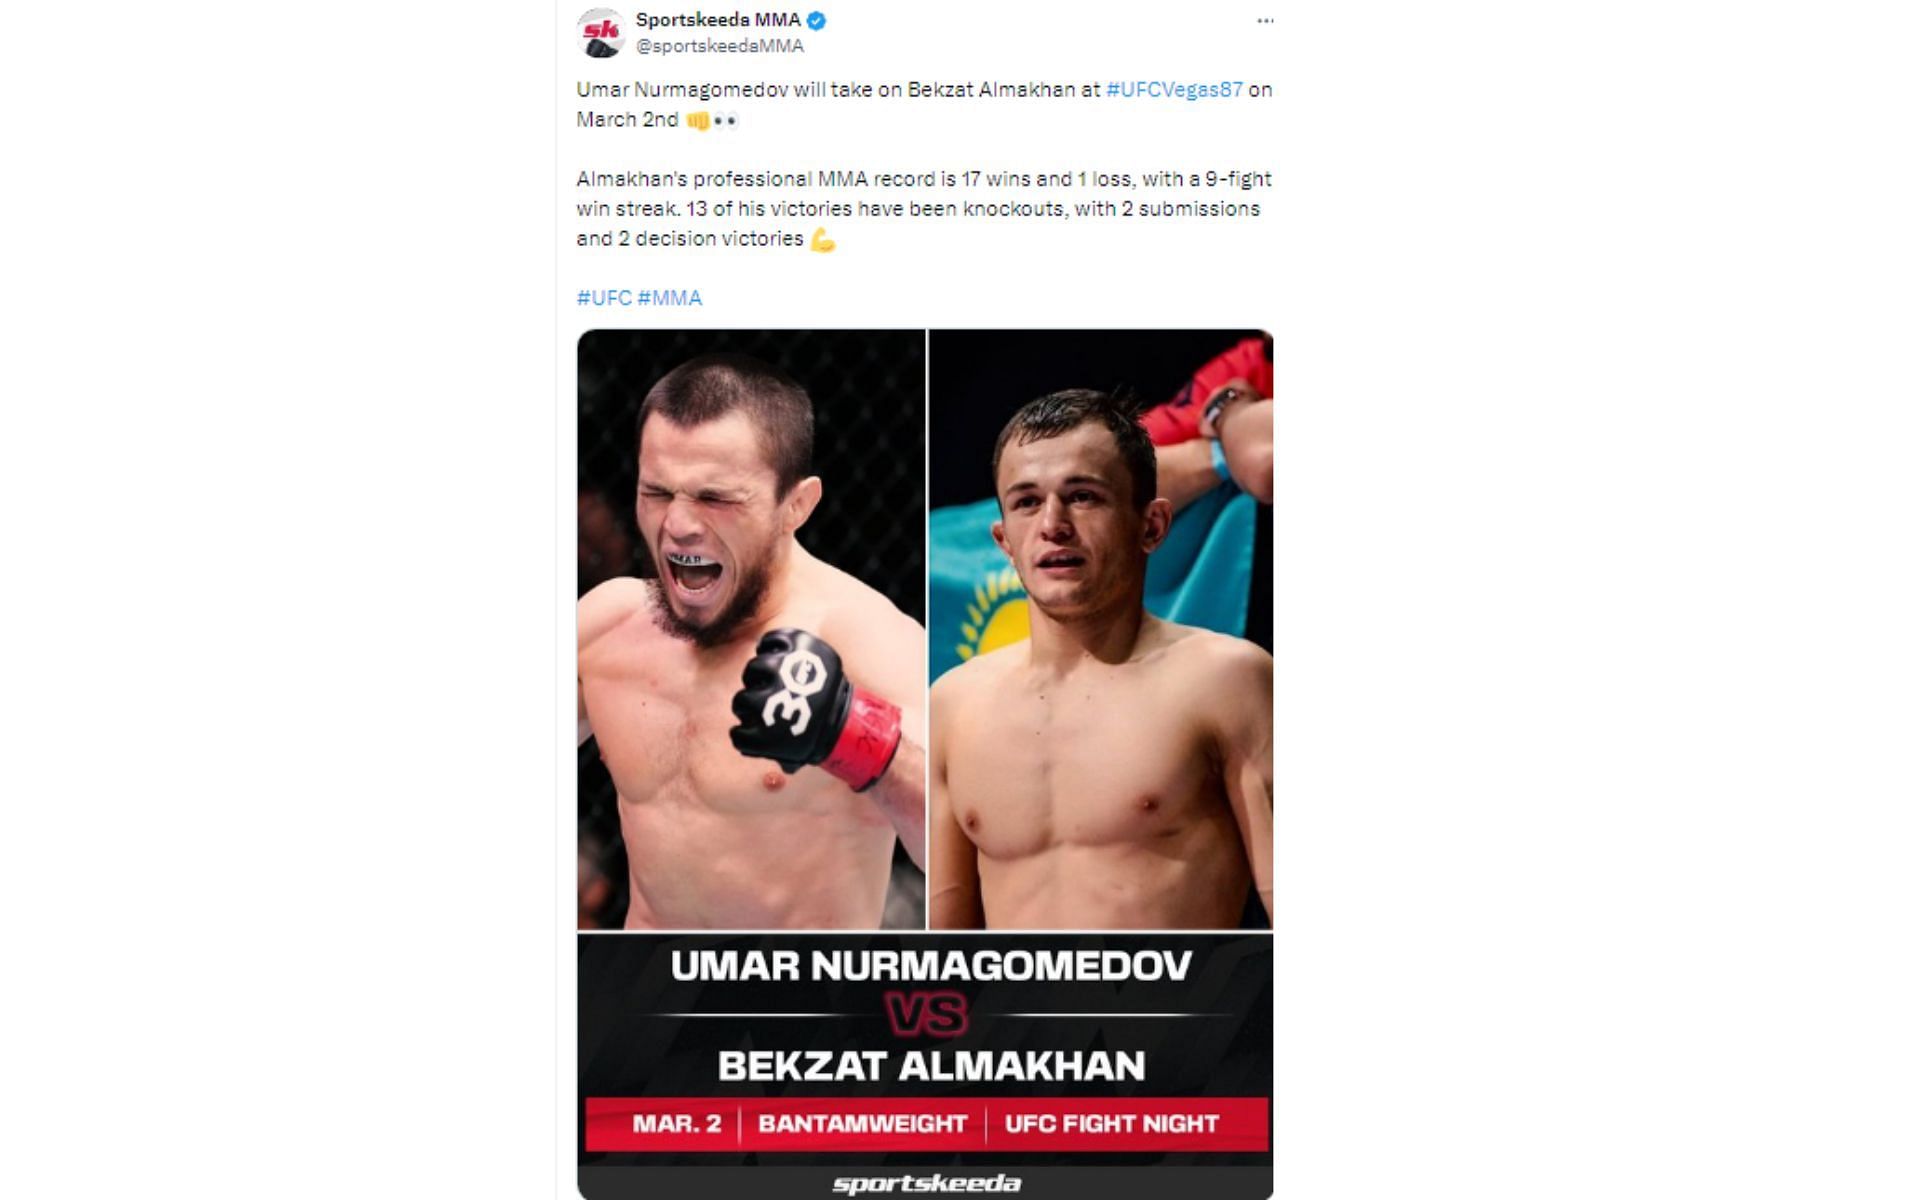 Tweet regarding Umar Nurmagomedov&#039;s next bout [Image courtesy: @sportskeedaMMA - X]